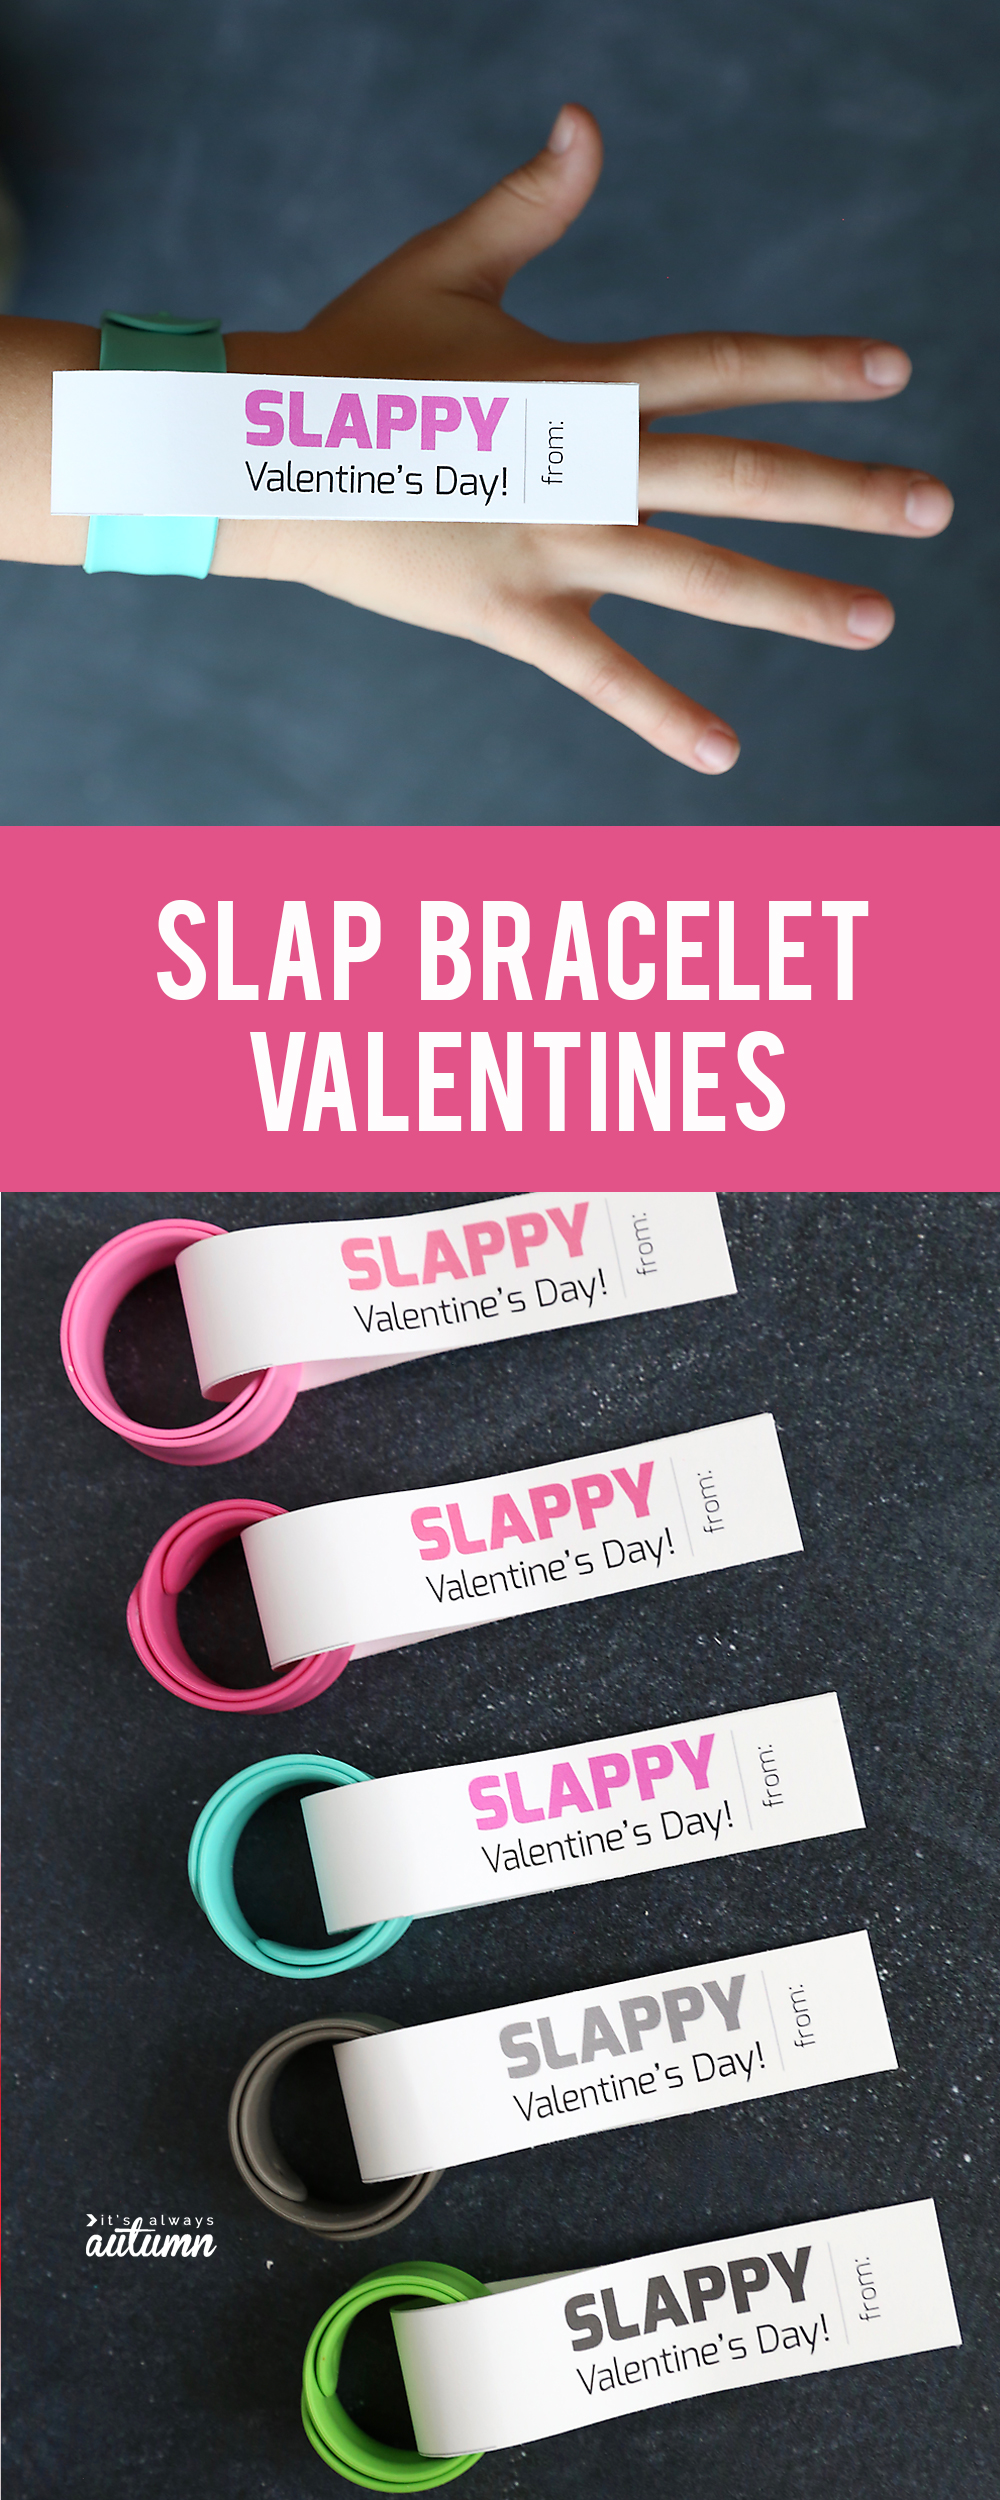 Slap bracelet Valentines